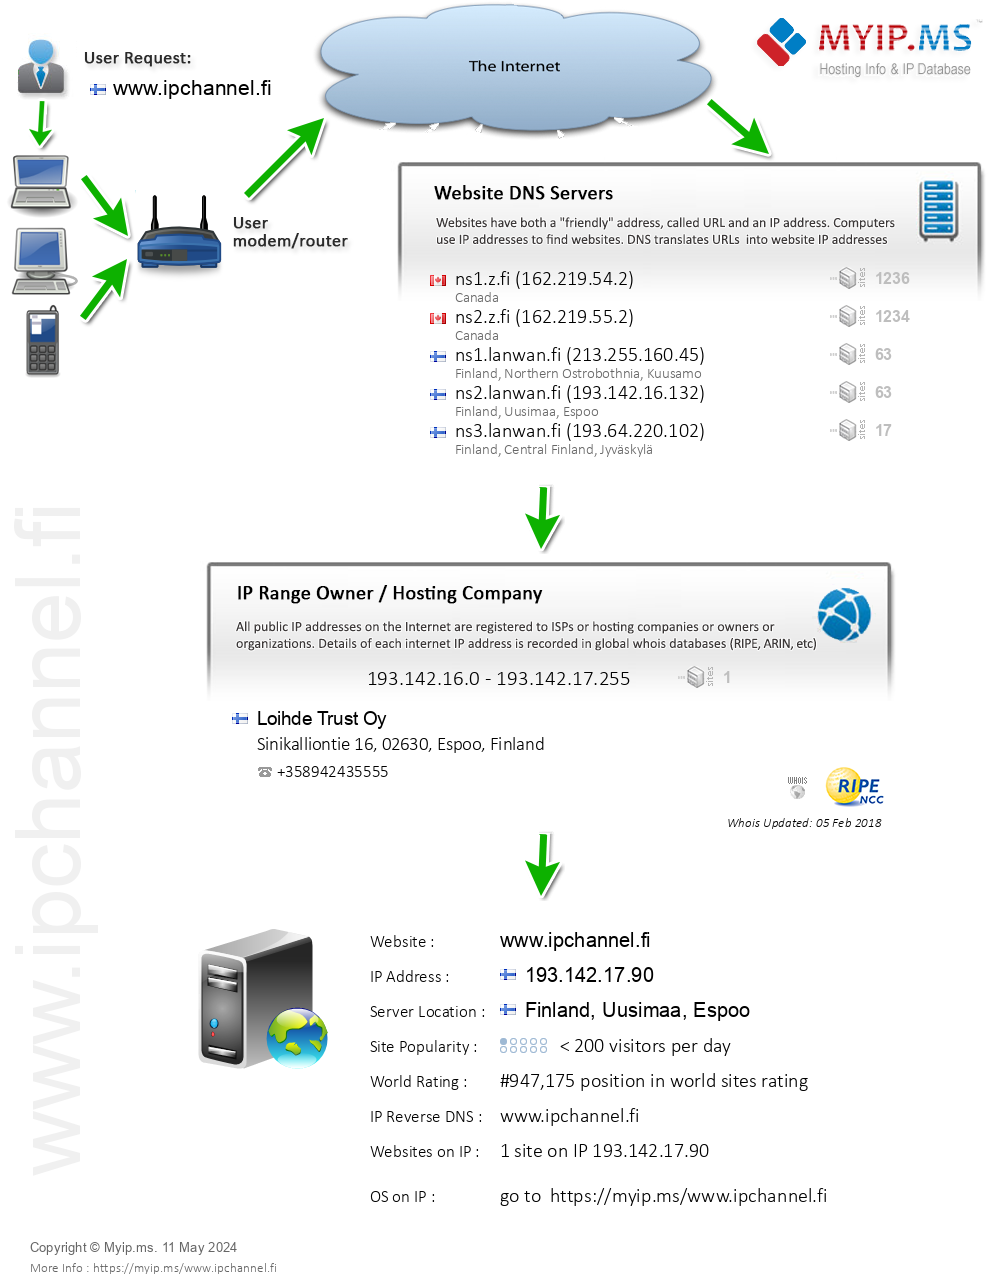 Ipchannel.fi - Website Hosting Visual IP Diagram